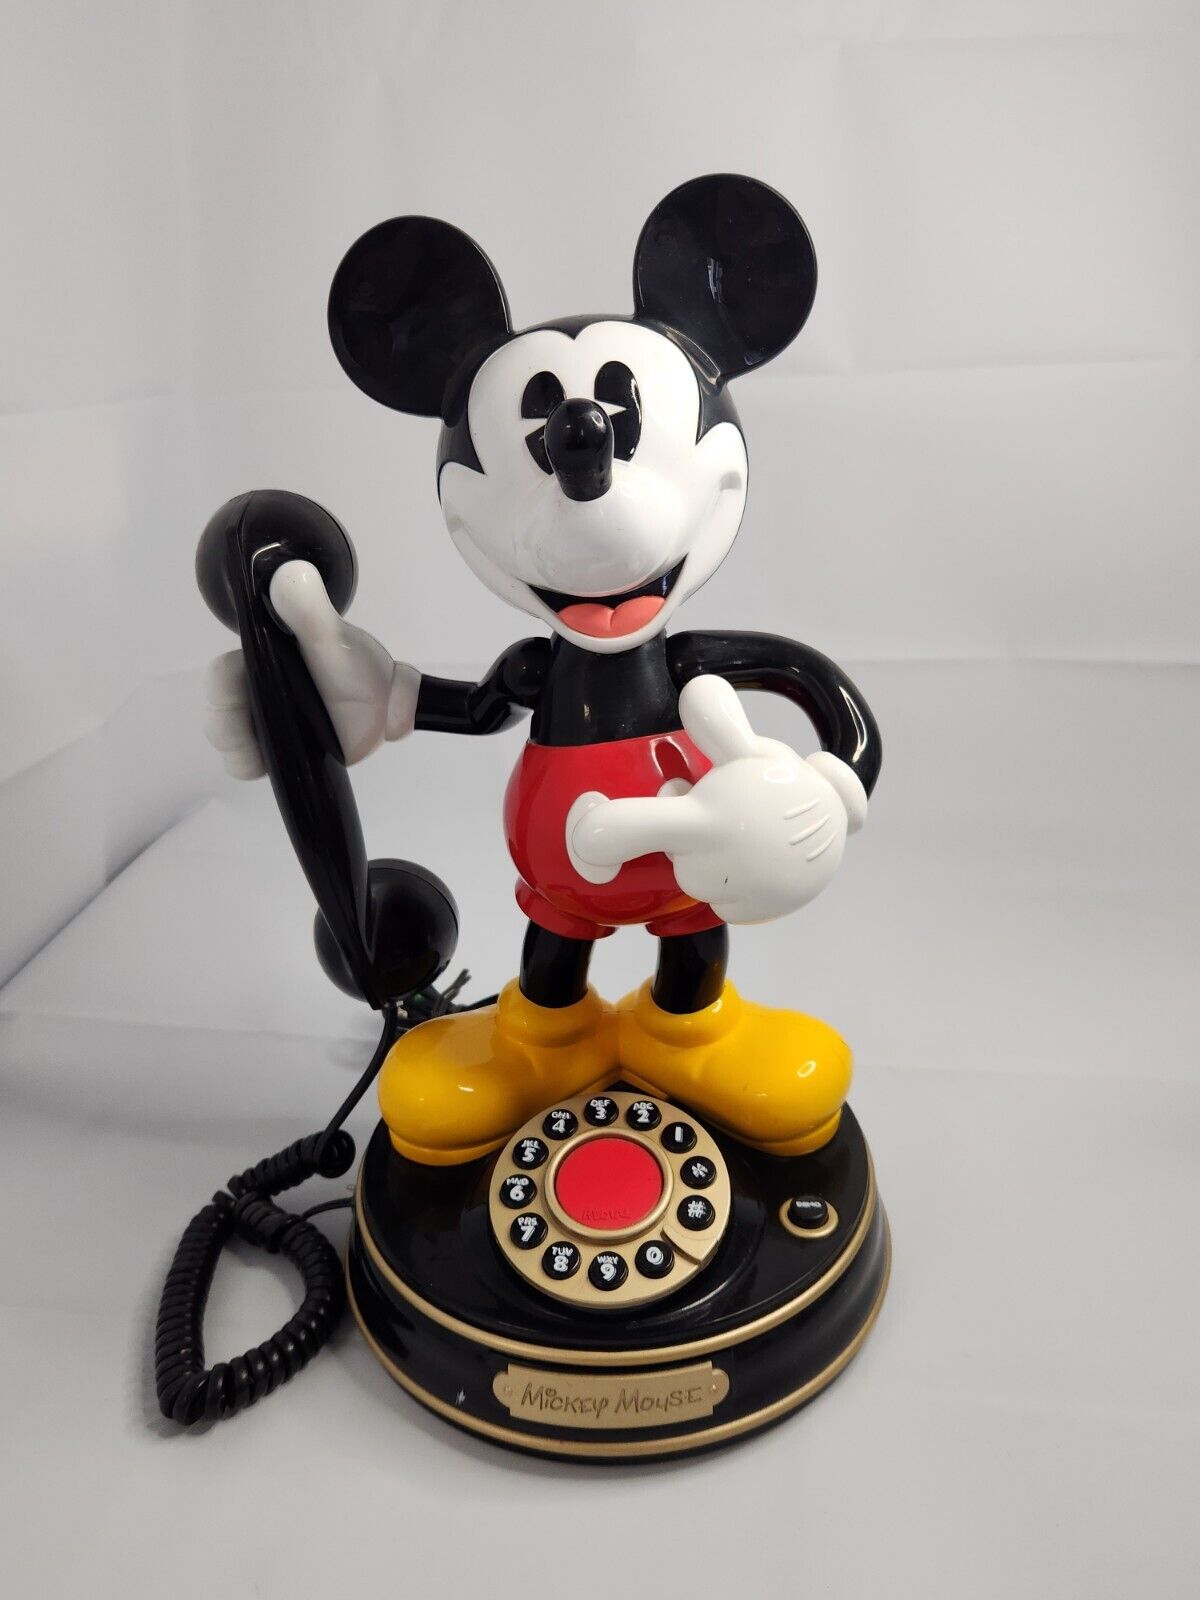 Disney Mickey Mouse Animated Talking Telephone Telemania Vintage 1997 WORKING